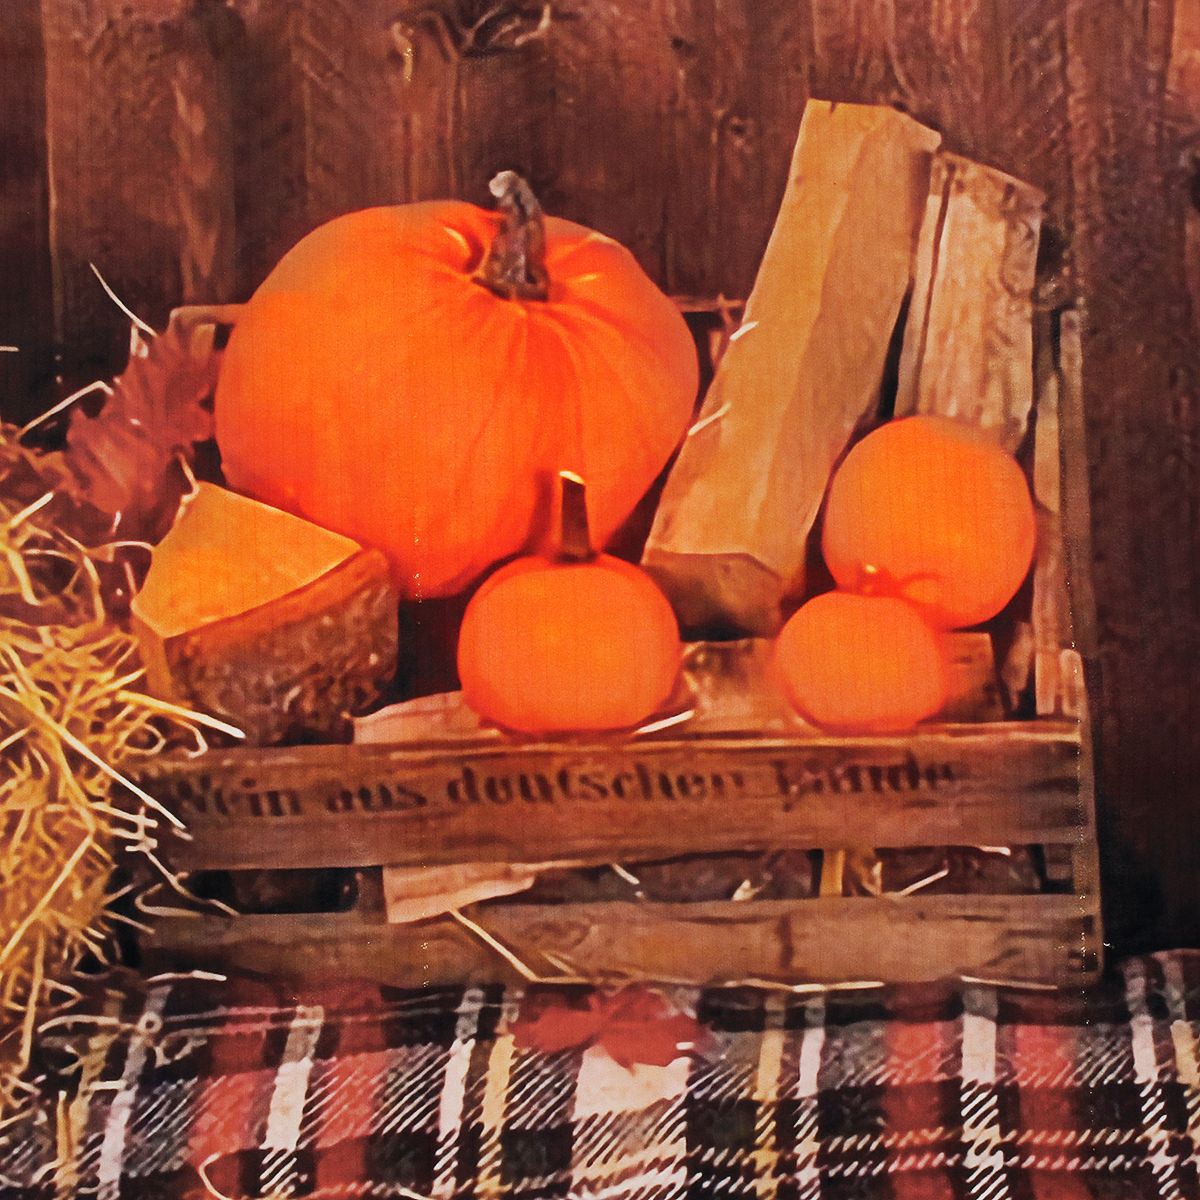 Fall-Thanksgiving-Backdrop-Photography-Video-Background-Pumpkins-Studio-Prop-1605774